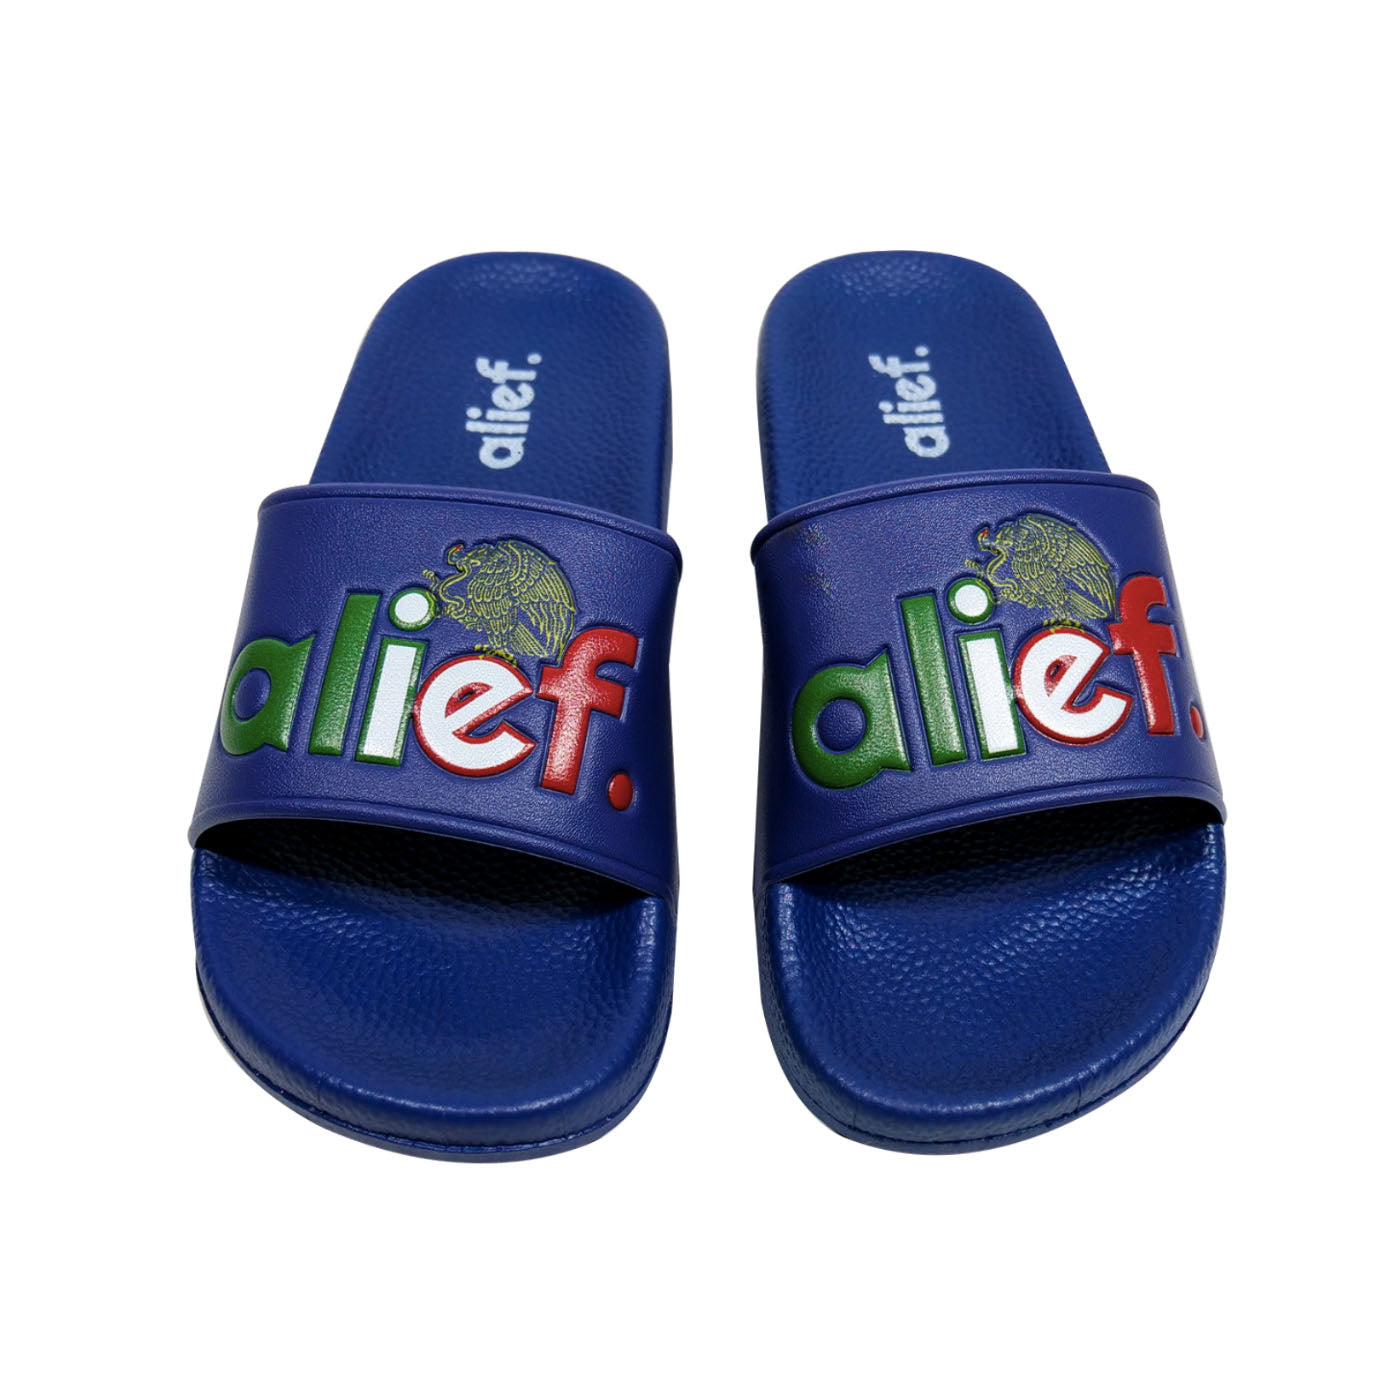 Alief Slides - Mexico/Blue